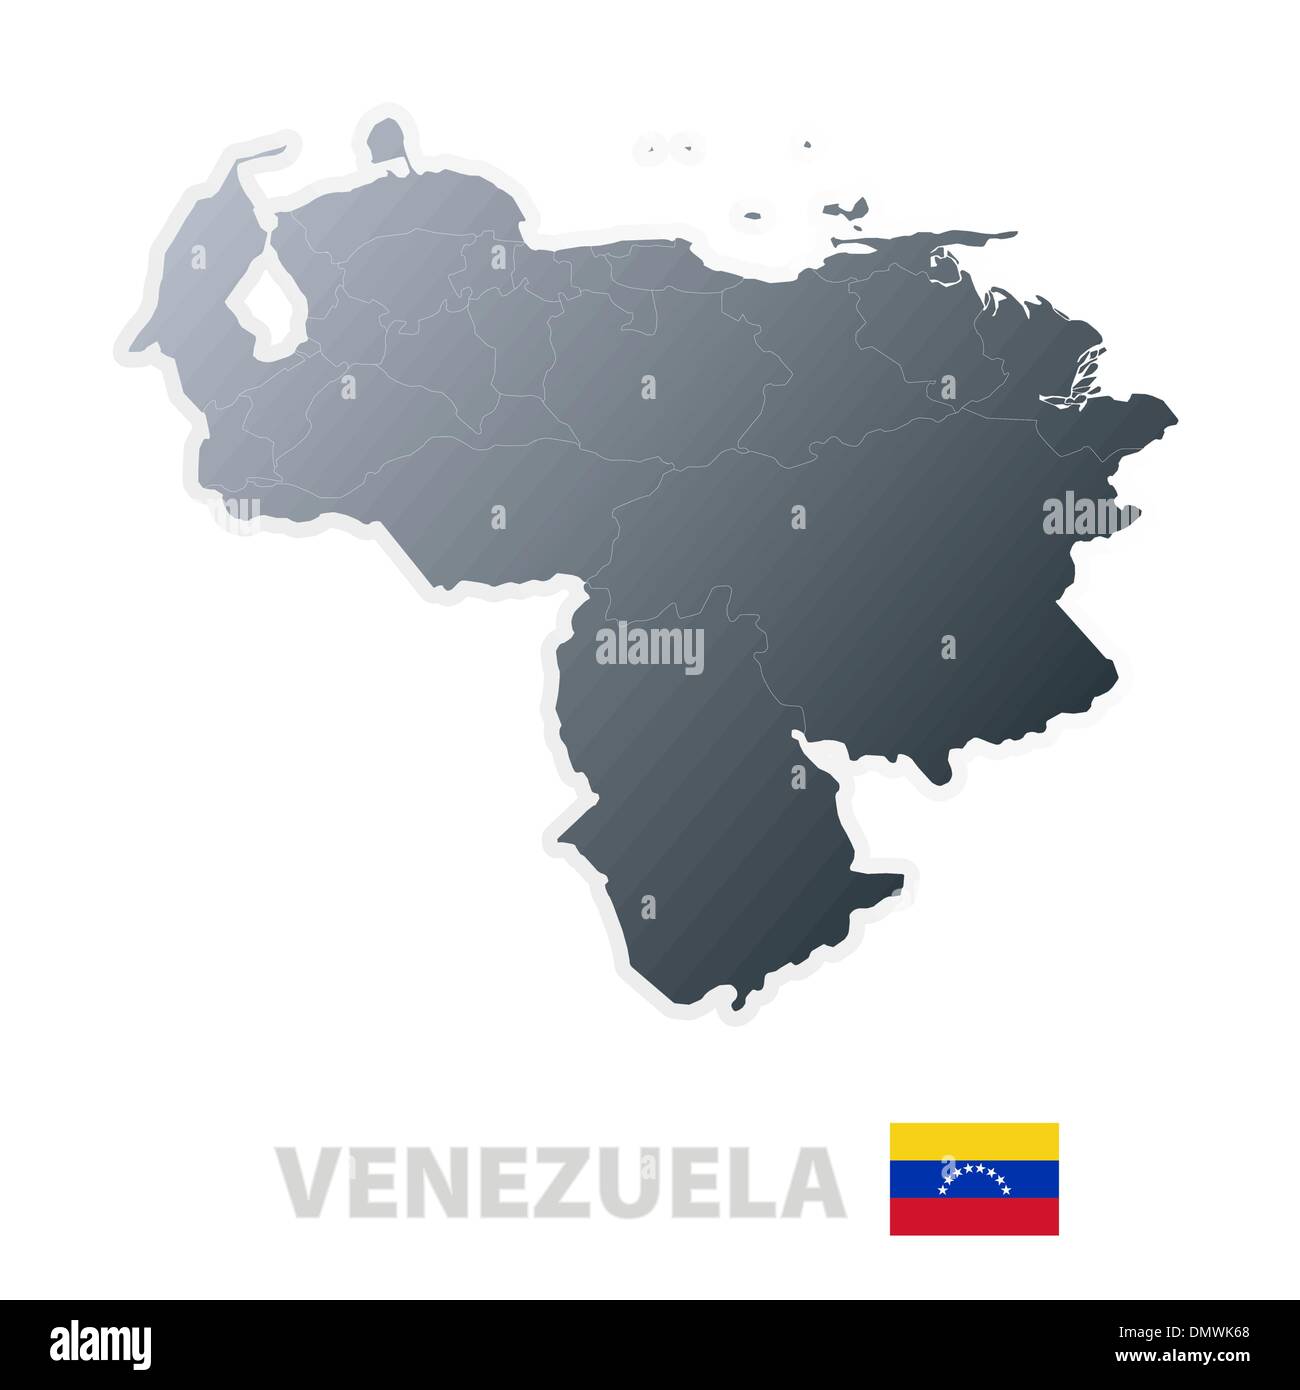 Venezuela map with official flag Stock Vector